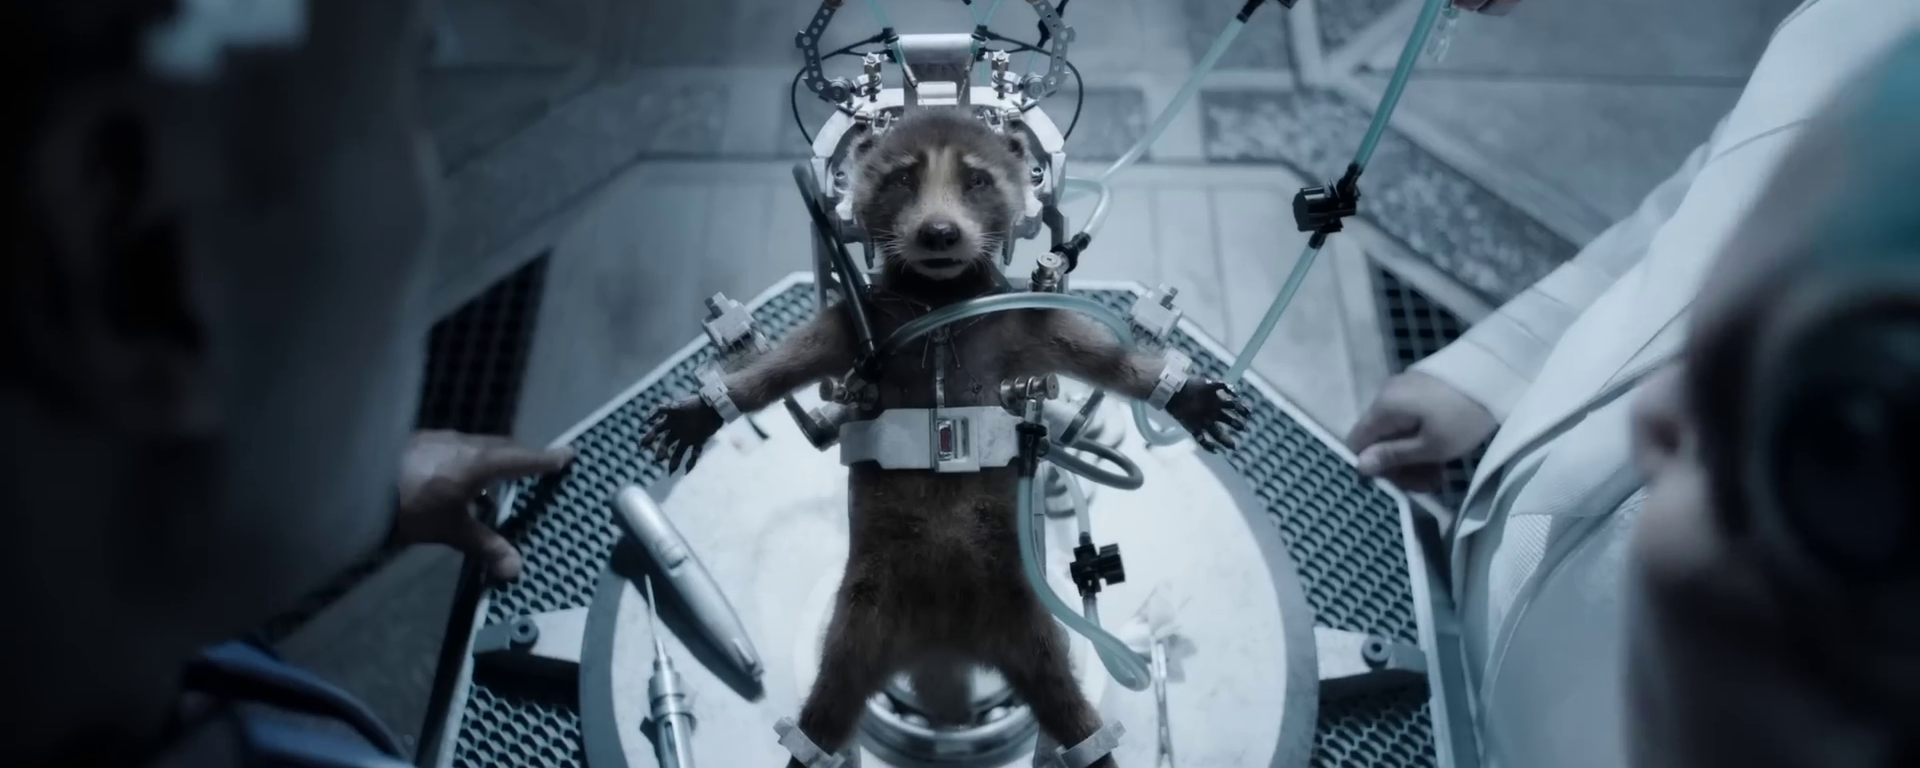 Raccoon (Bradley Cooper) - Les Gardiens de la Galaxie 3 ©Marvel